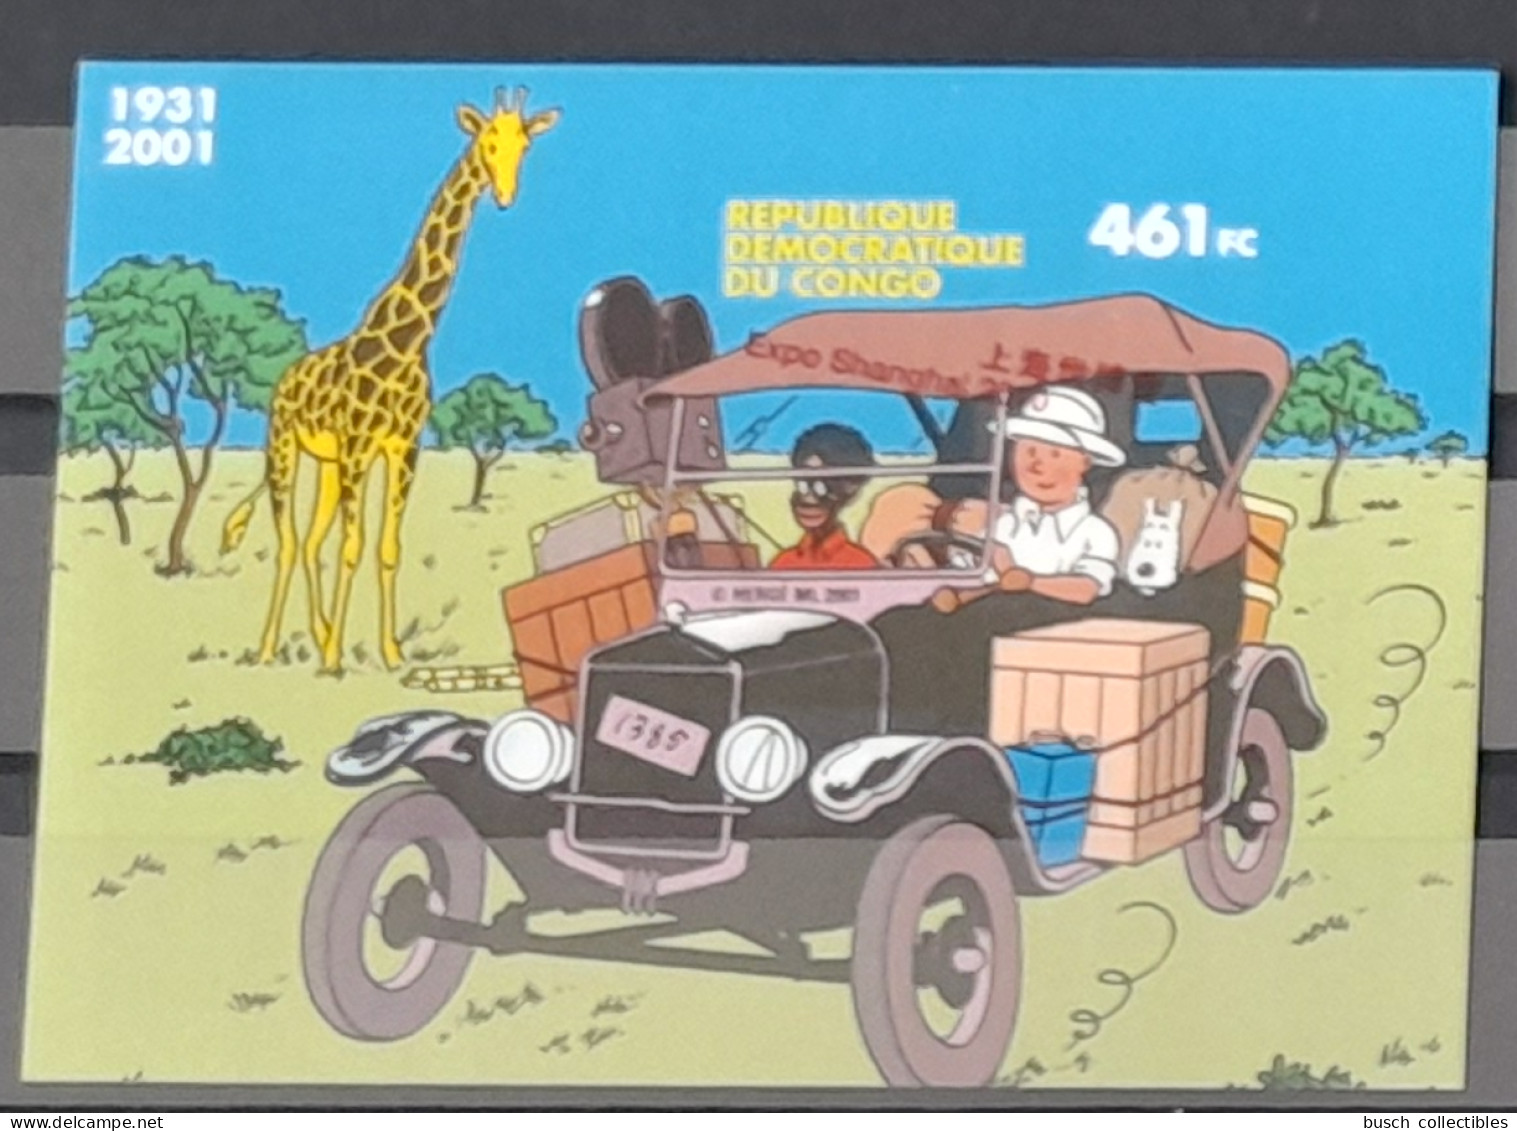 Congo Kinshasa 2010 Mi. Bl. ? ND IMPERF VARIETE SURCHARGE OBLIQUE Overprint Tintin Joint Issue Girafe Expo Shanghai - Gemeinschaftsausgaben